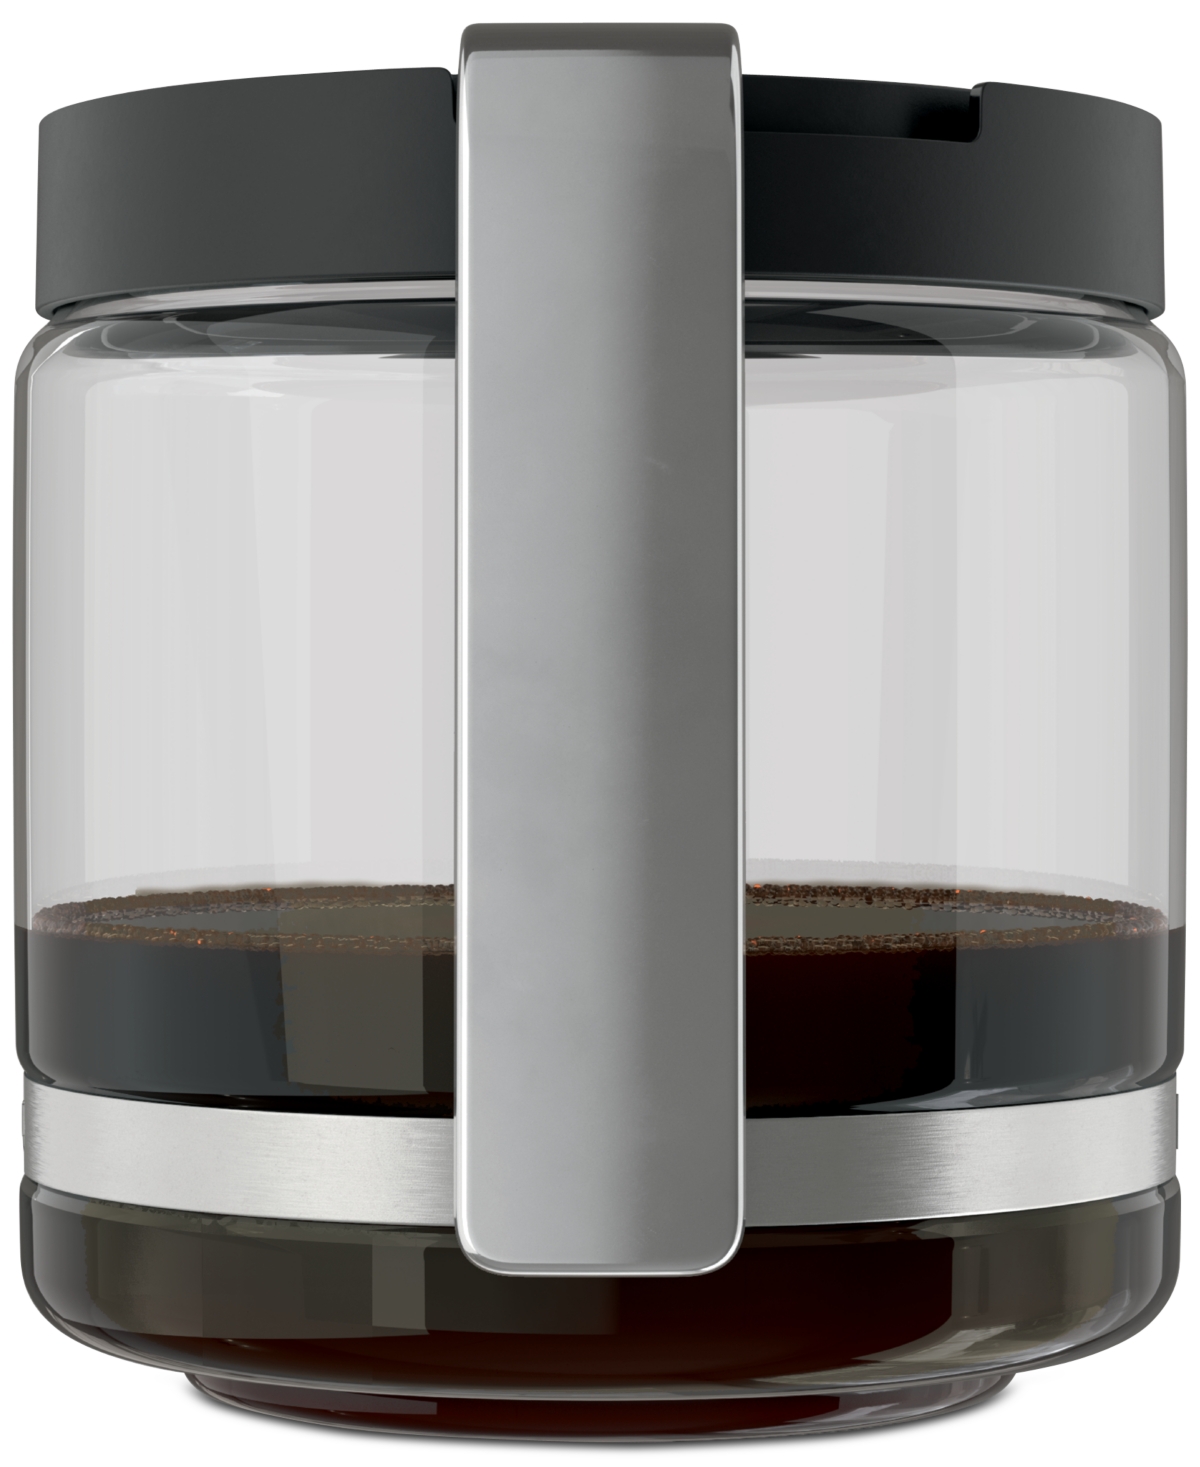 Shop Ninja Dcm201 Programmable Xl 14-cup Coffee Maker Pro In Black,stainless Steel